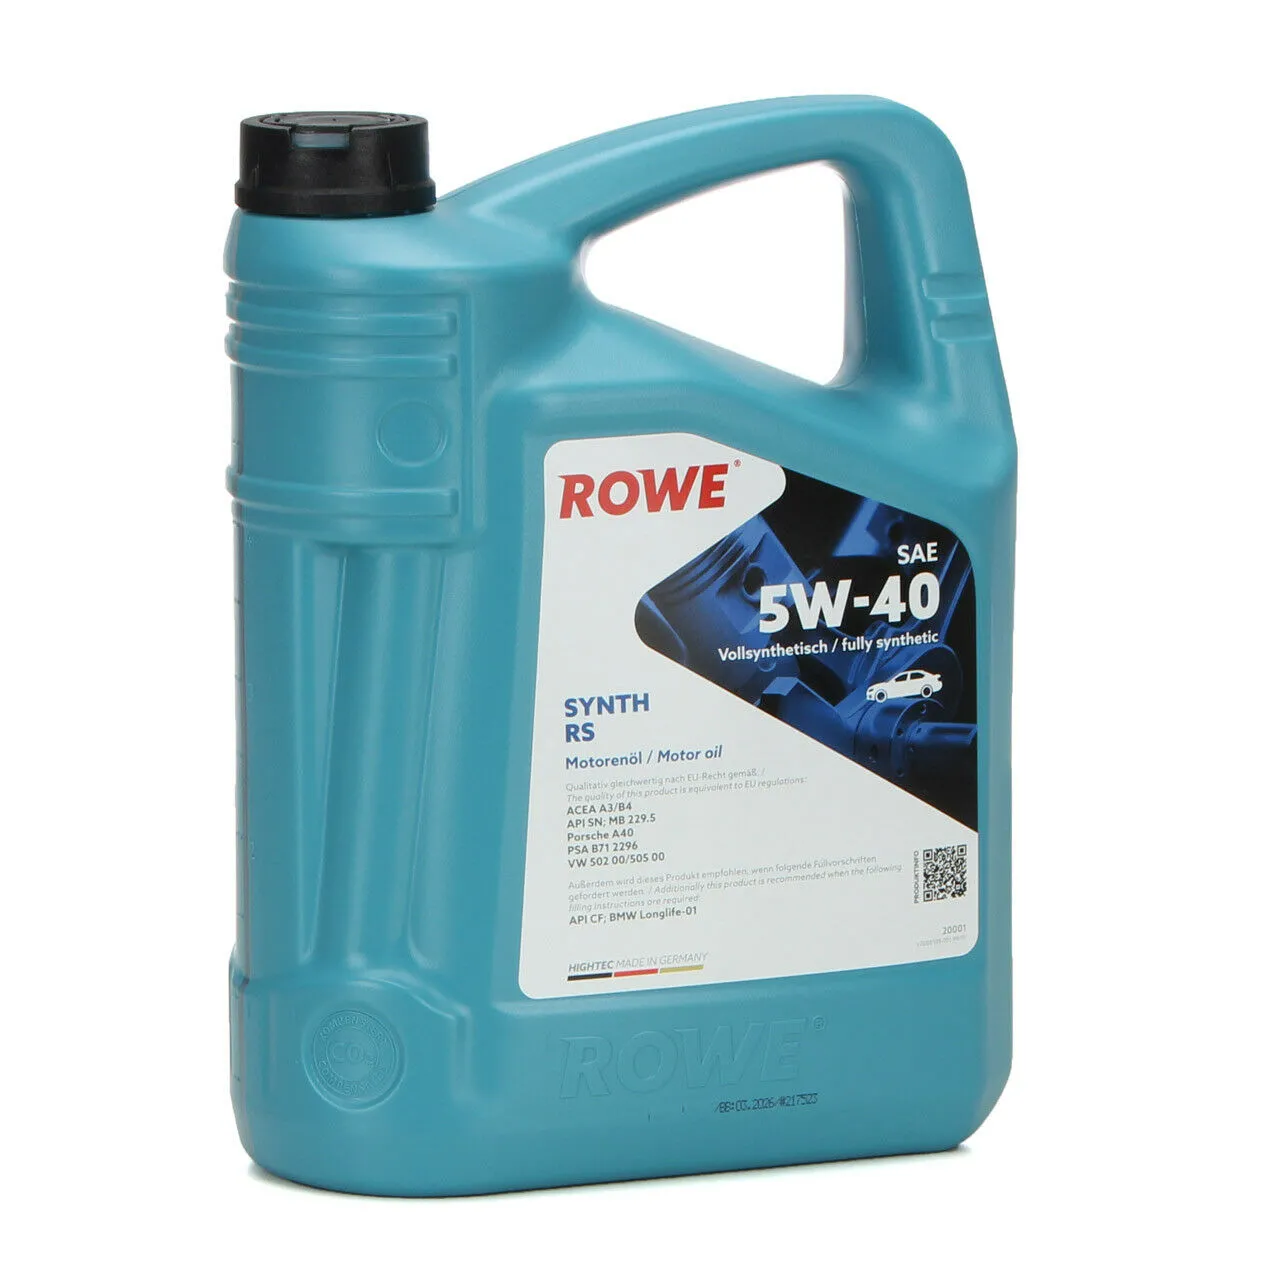 10 Liter ROWE Motoröl Öl SYNTH RS 5W-40 MB 229.5 PSA B71 2296 VW 502.00/505.00